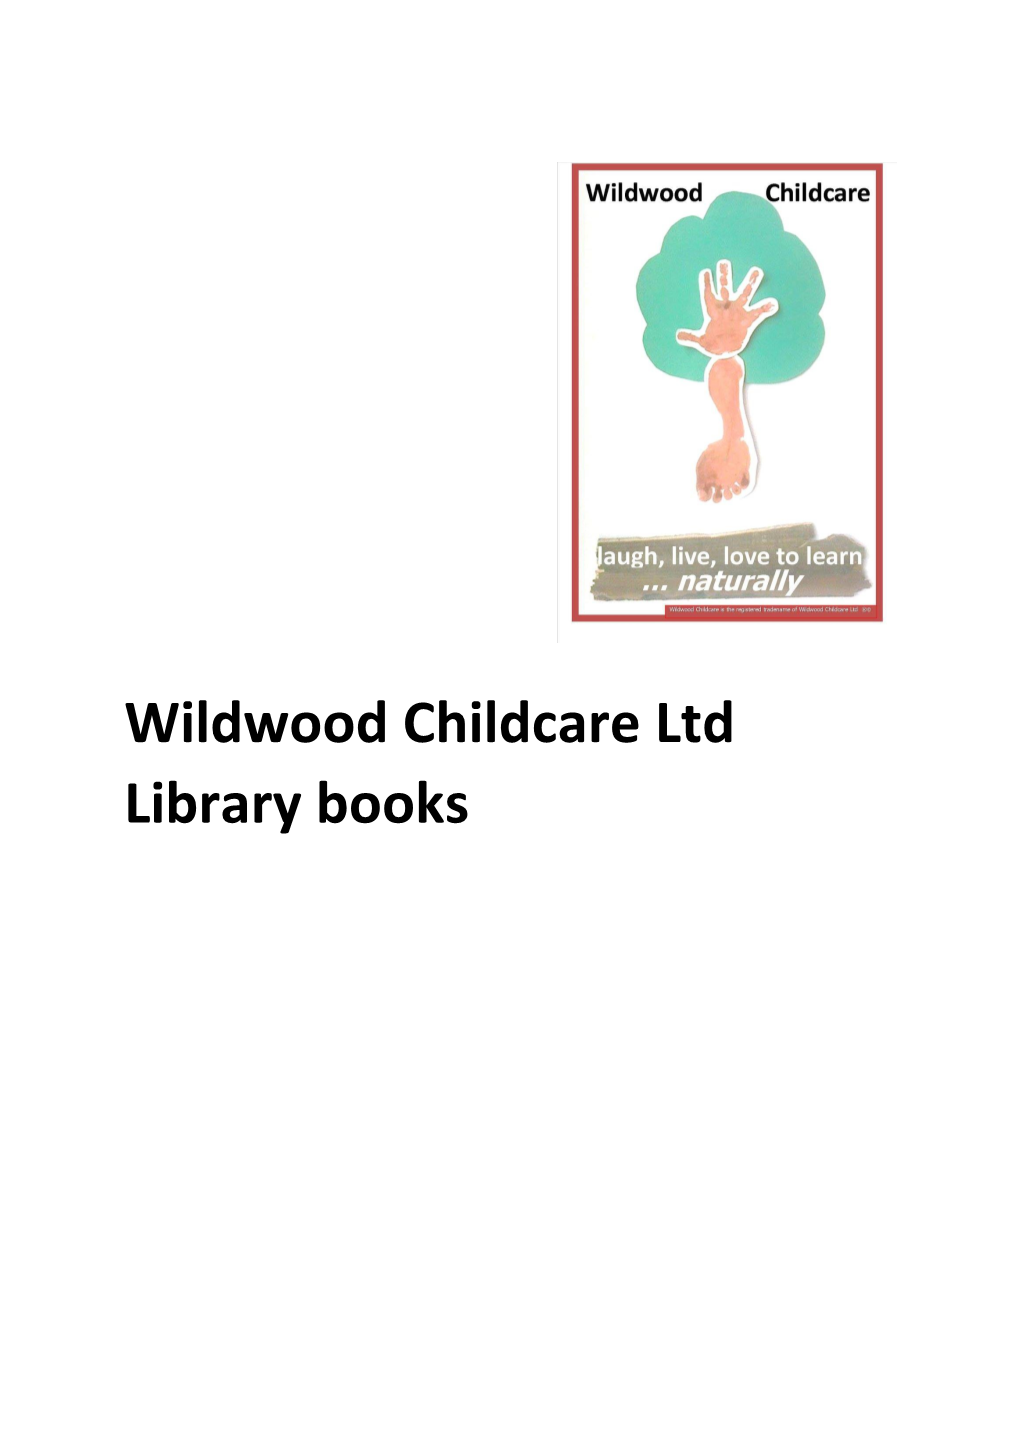 Wildwood Childcare Ltd Library Books